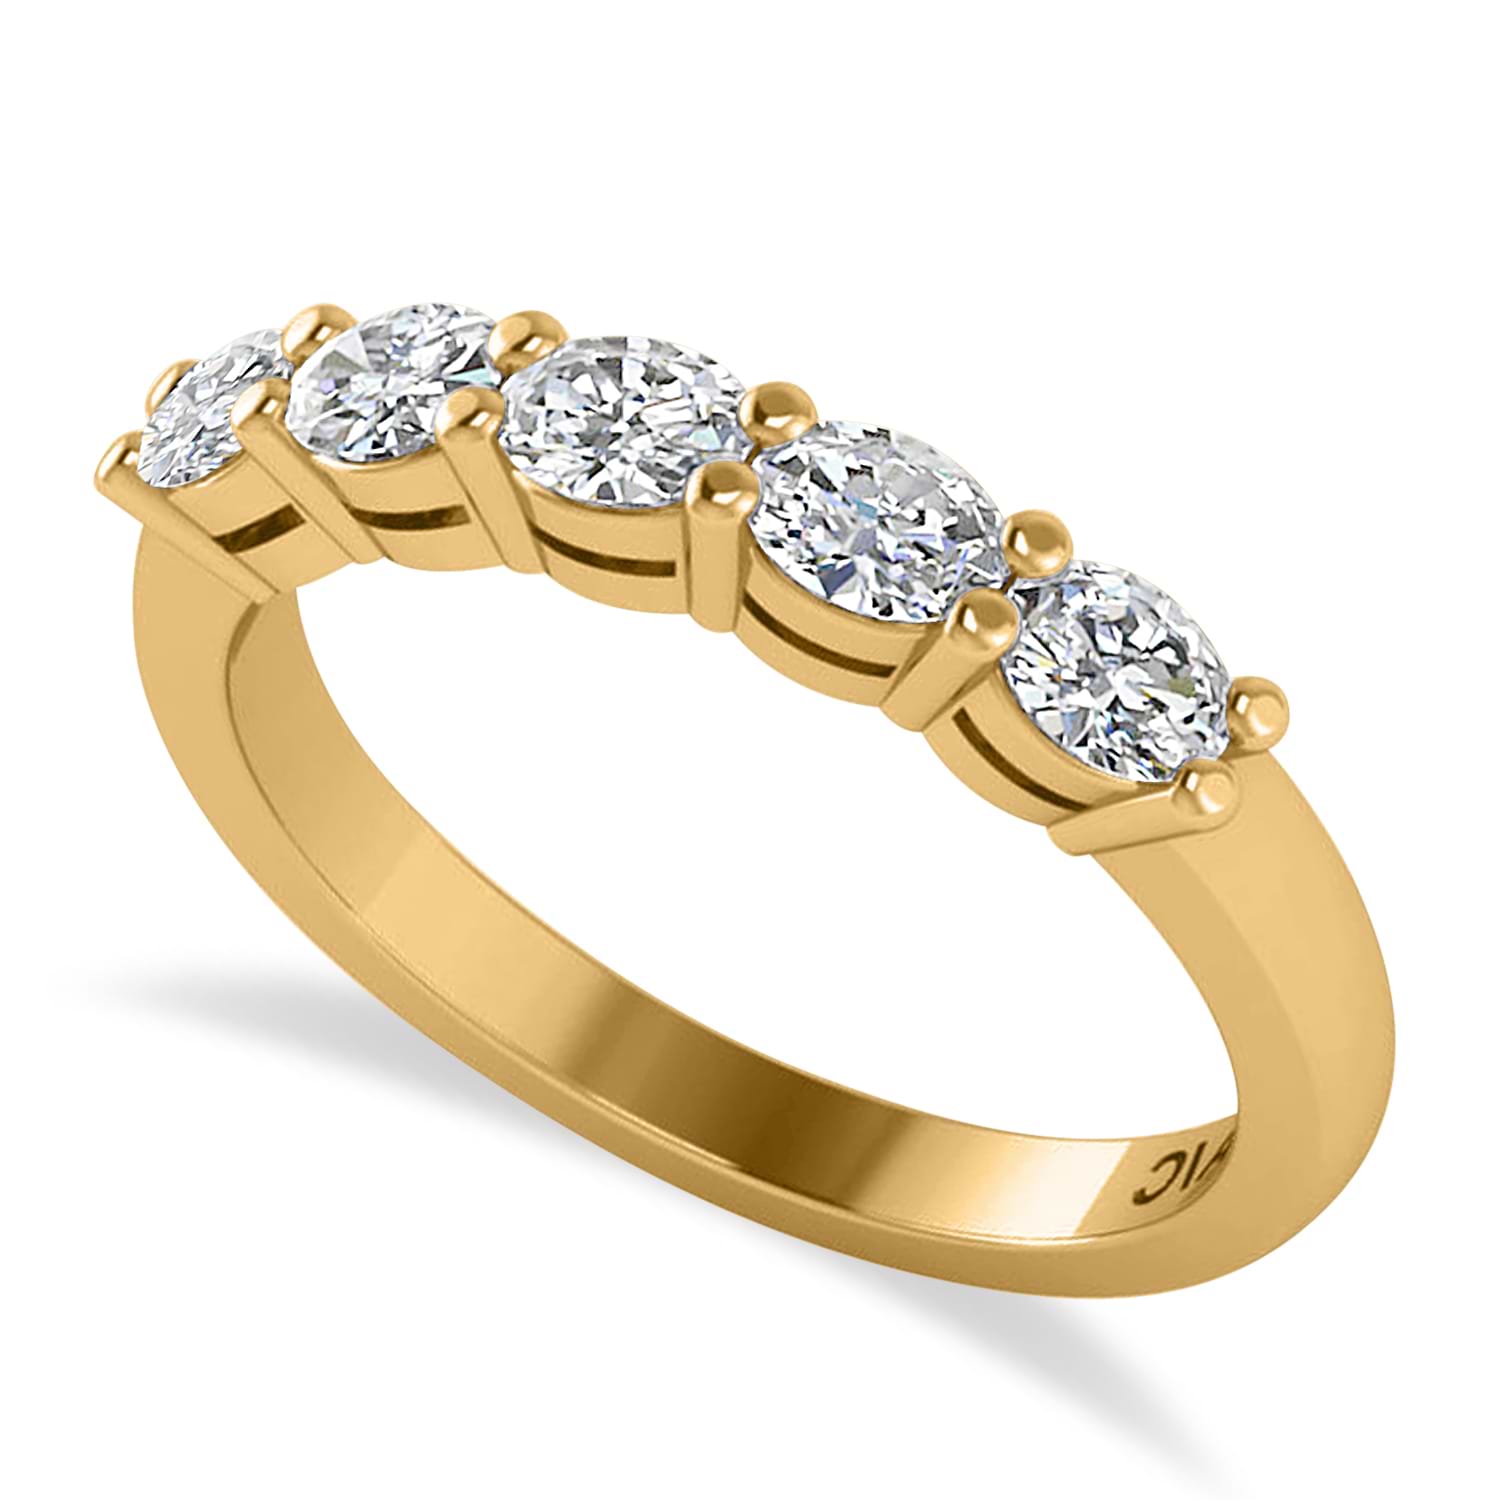 Oval Diamond Five Stone Wedding Band 14k Yellow Gold (1.00ct)